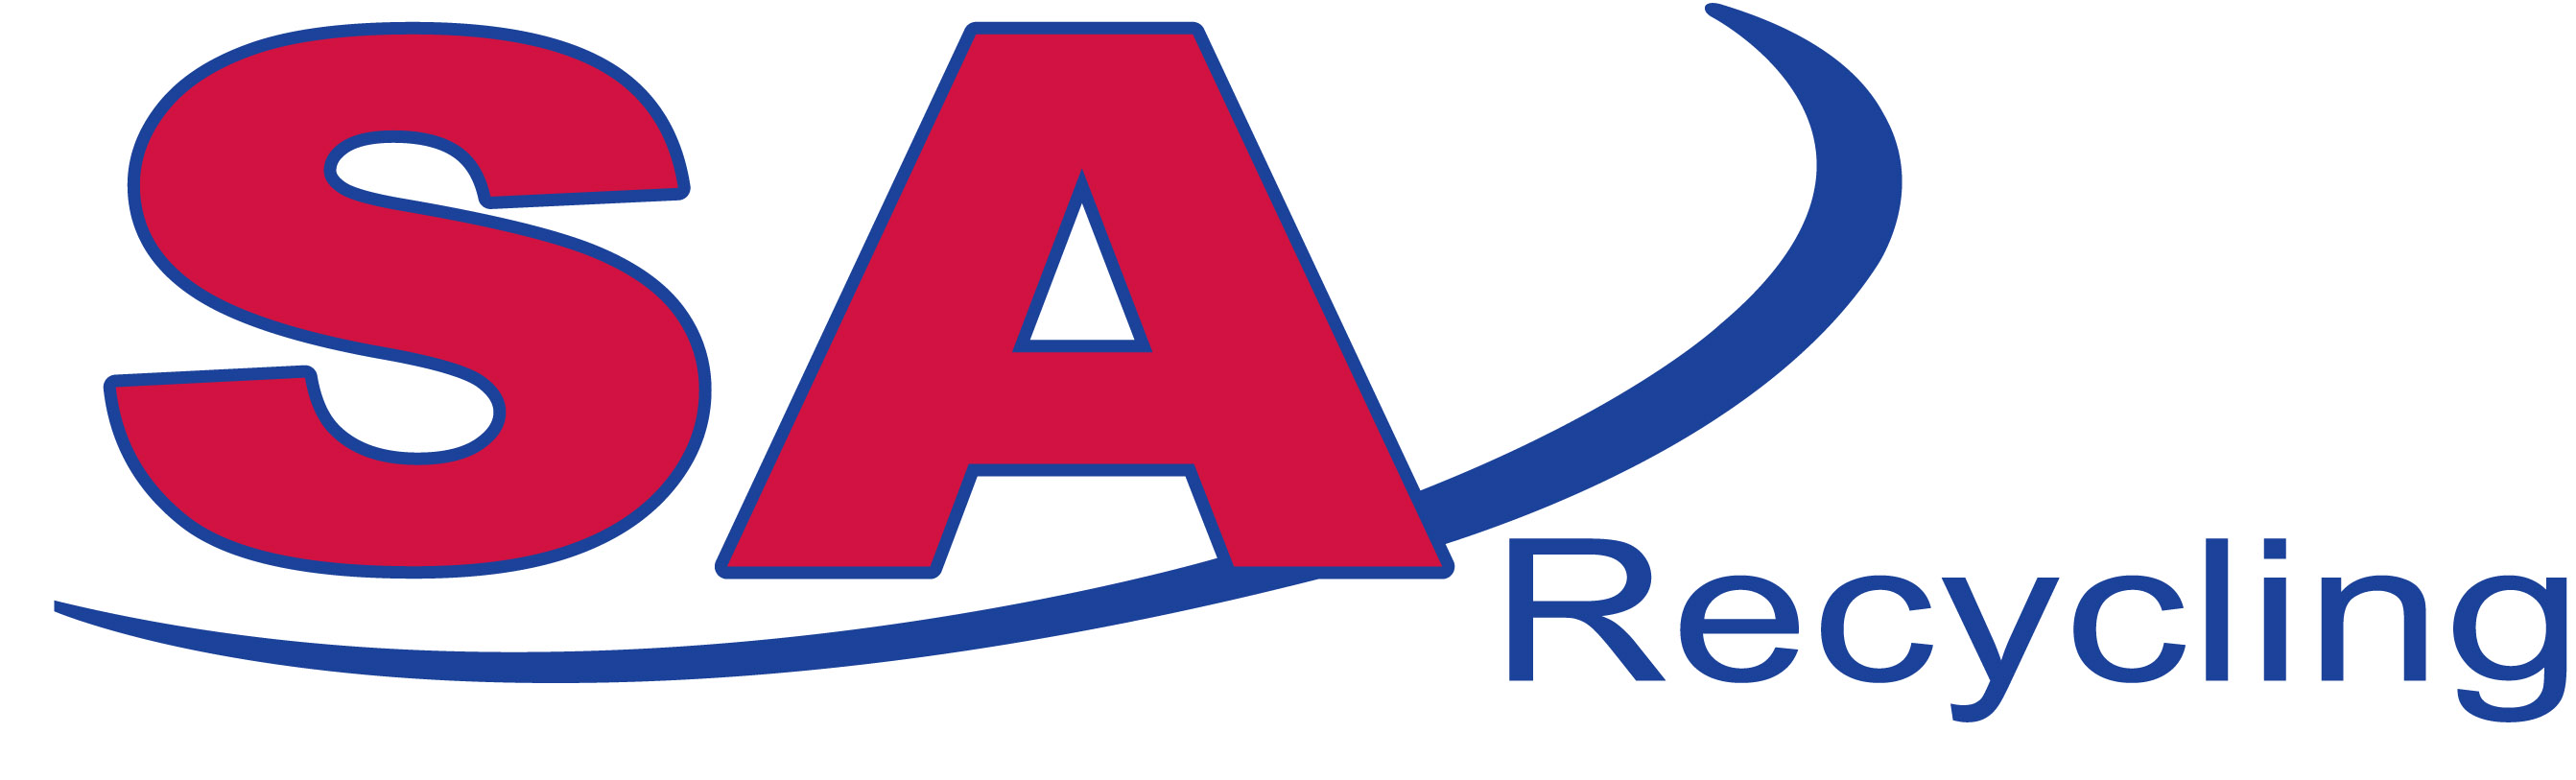 SA Recycling logo